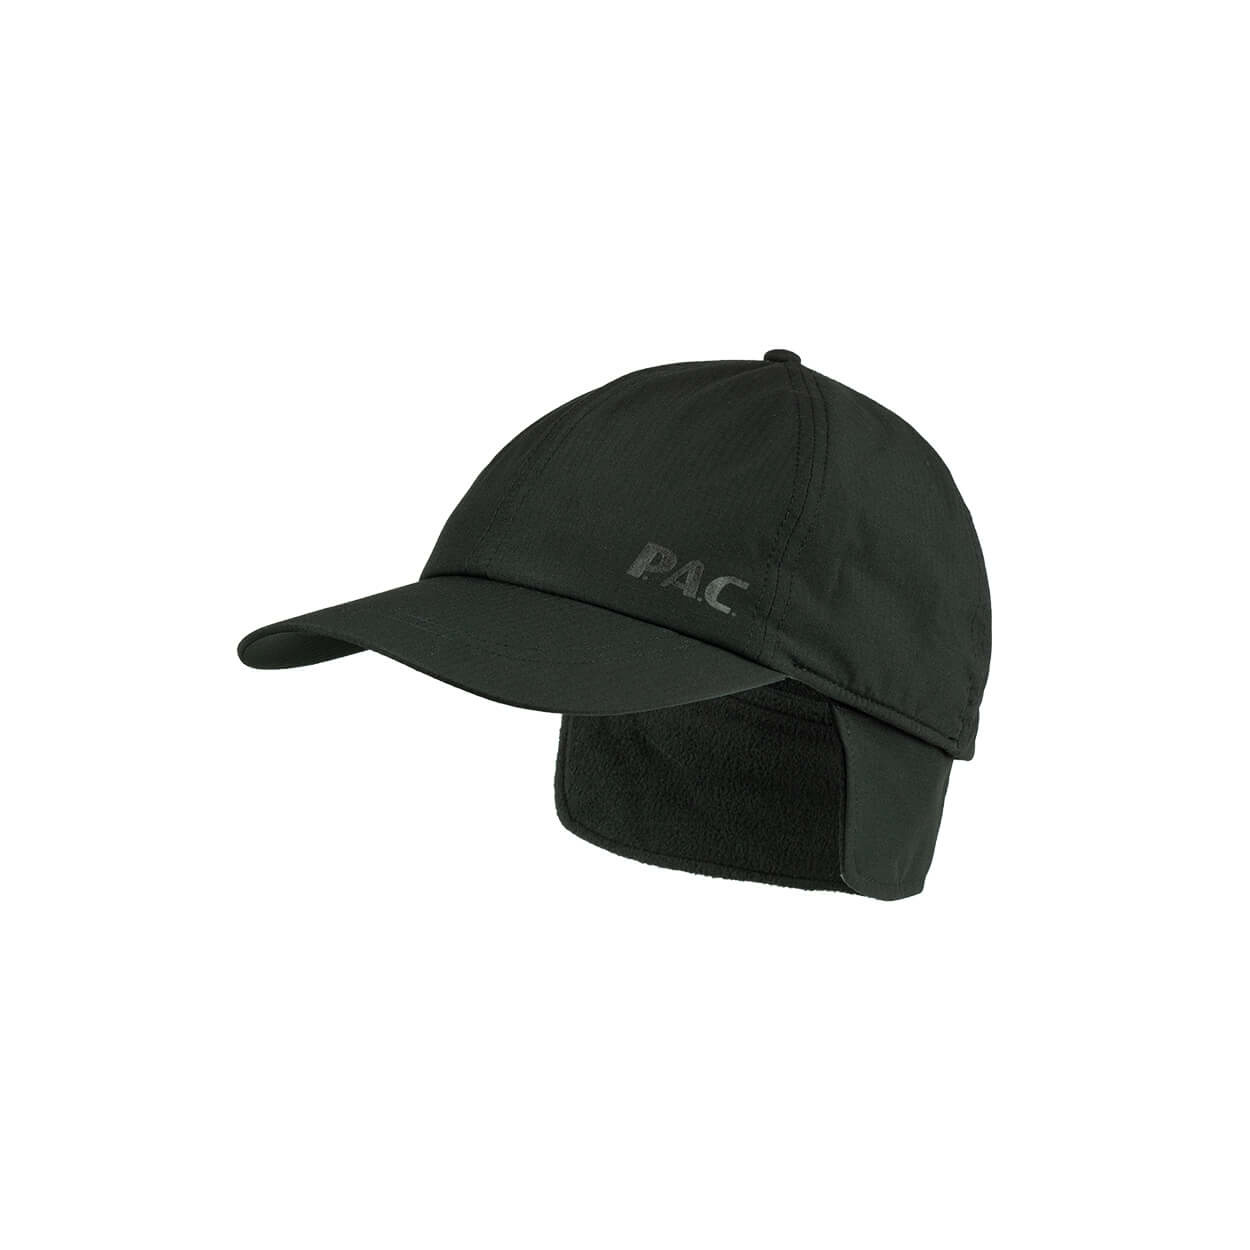 PAC Dhawal GORE-TEX Ear Flap online | BUFF Cap kaufen L/XL Outdoor - Black HEADWEAR-SHOP im und PAC 